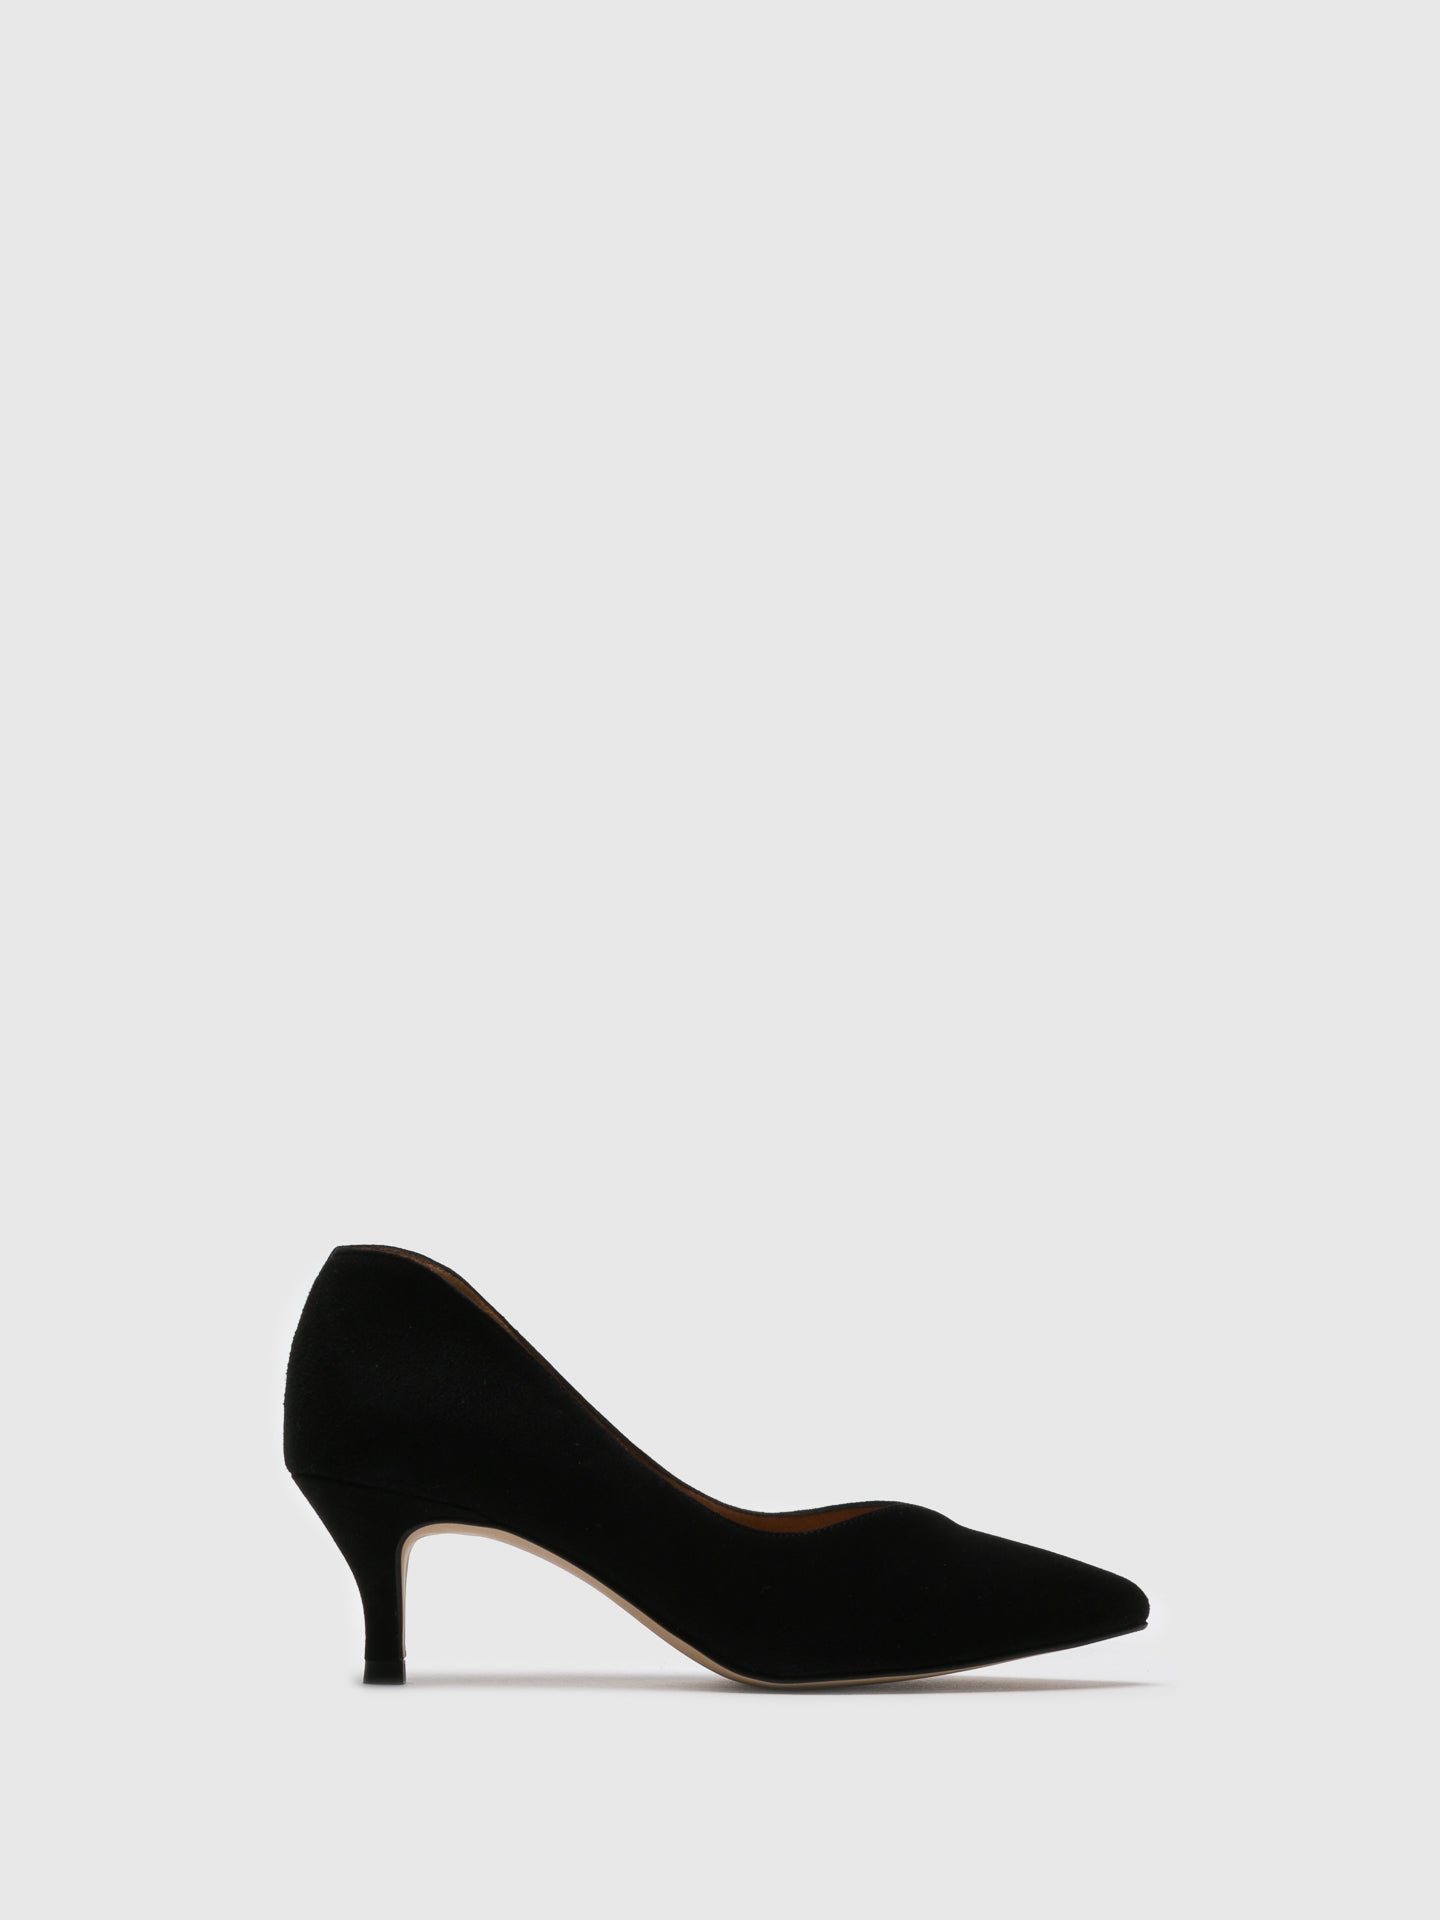 Sofia Costa Black Kitten Heel Shoes